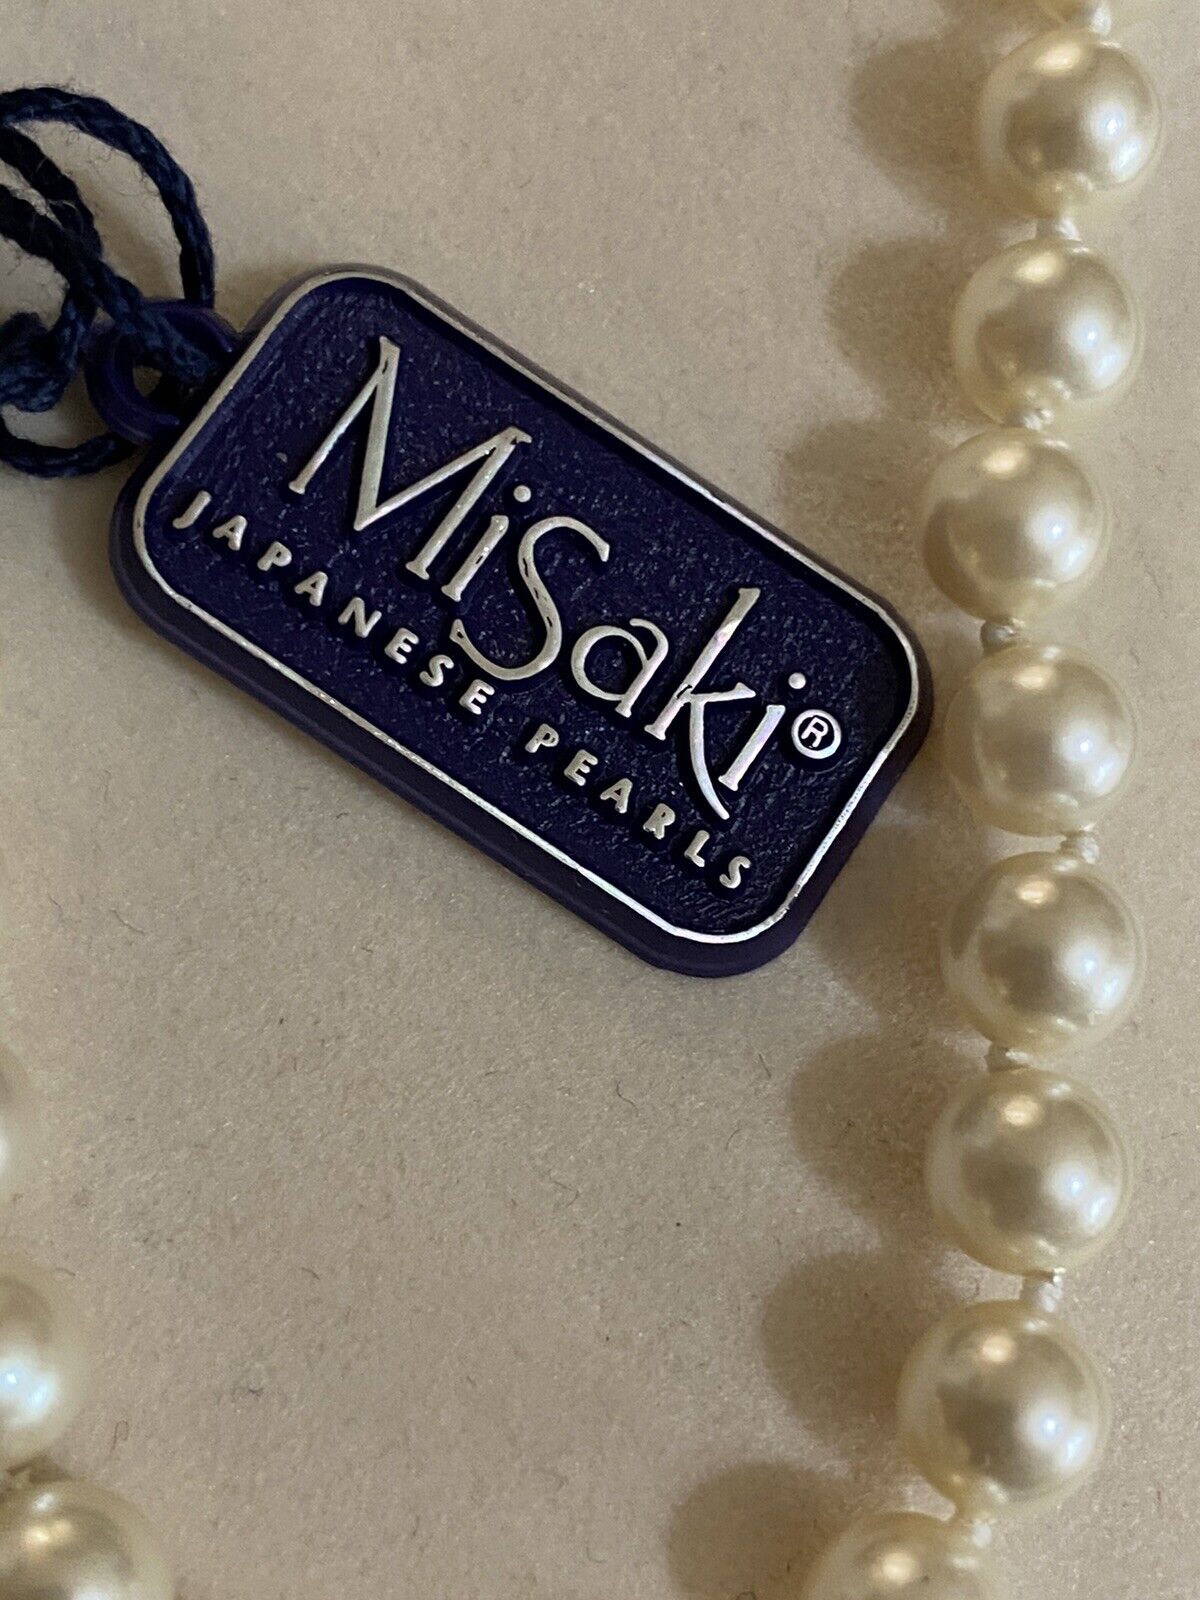 Beautiful Genuine Misaki Japanese Pearls Necklace, New & Boxed | eBay